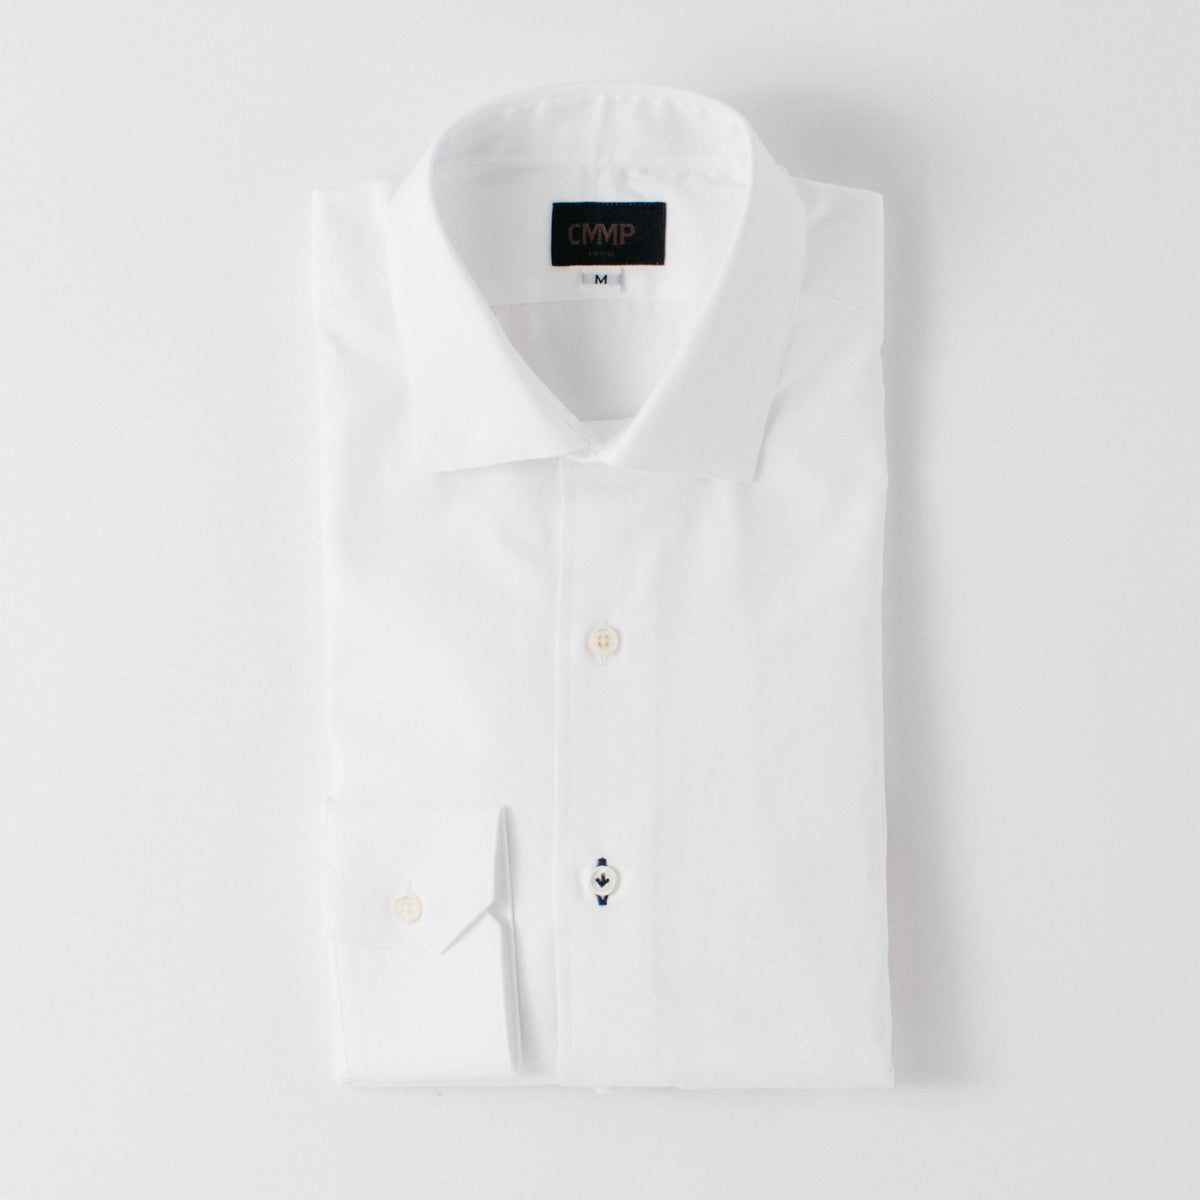 CORE // White Shirt Shirts Commonwealth Proper